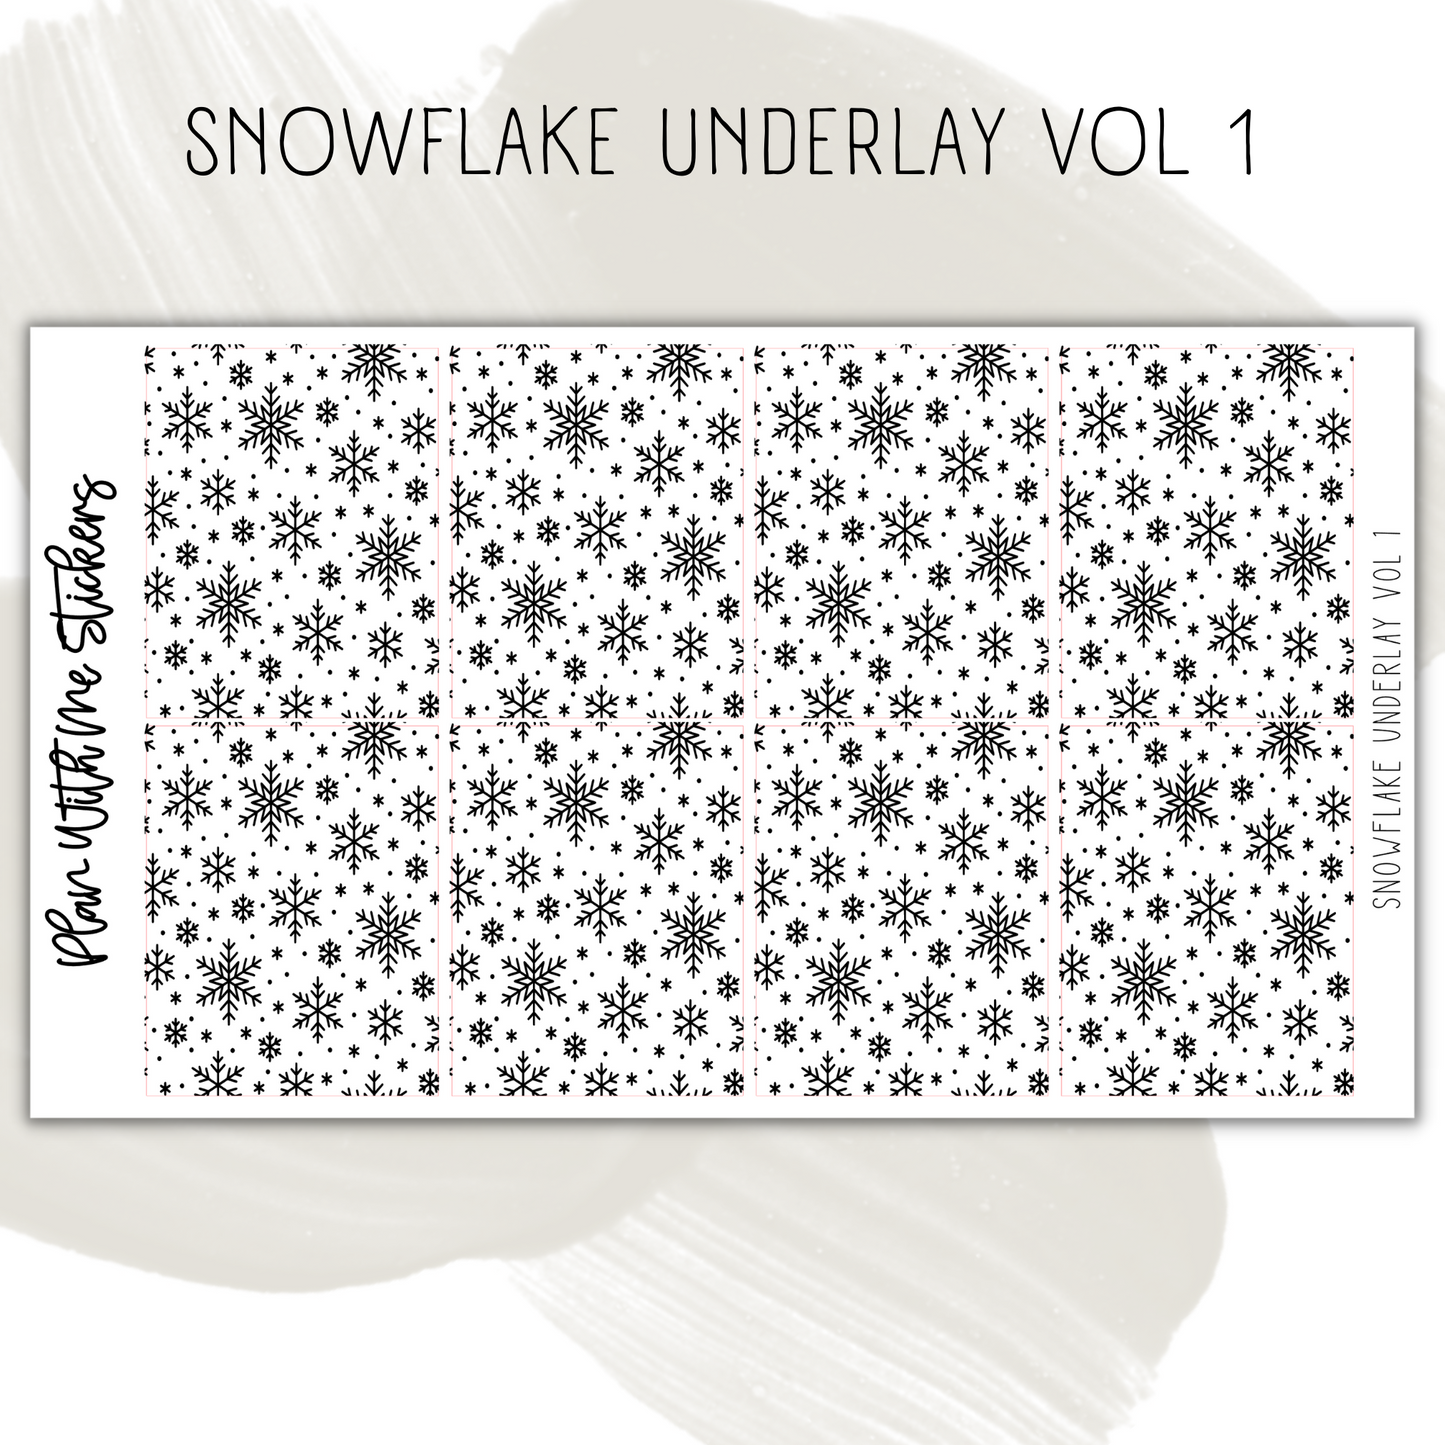 Snowflake Underlay Vol 1